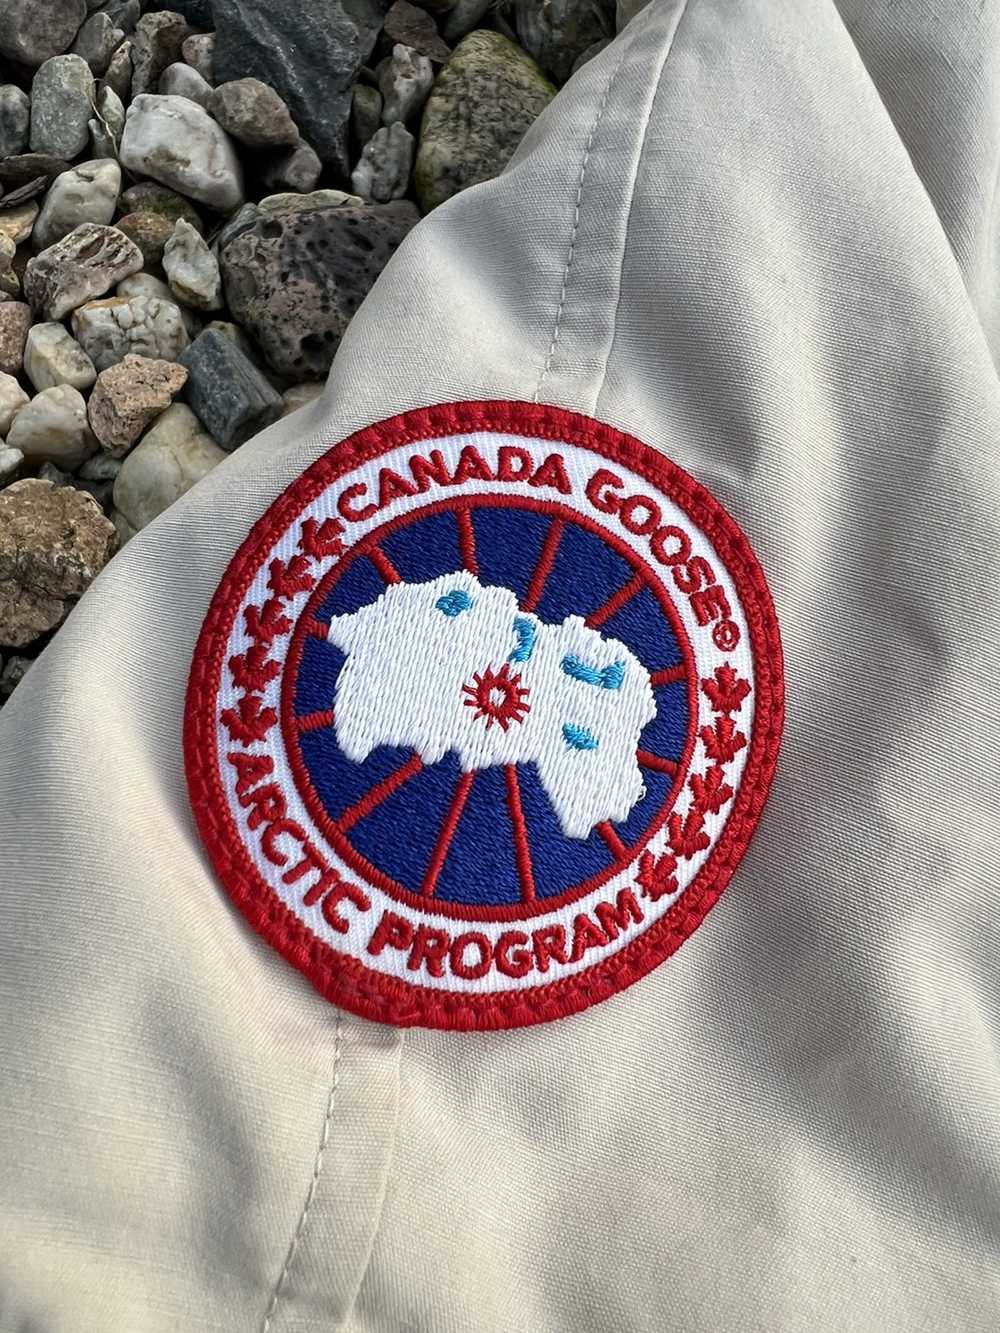 Canada Goose Canada Goose chillwack bomber winter… - image 3